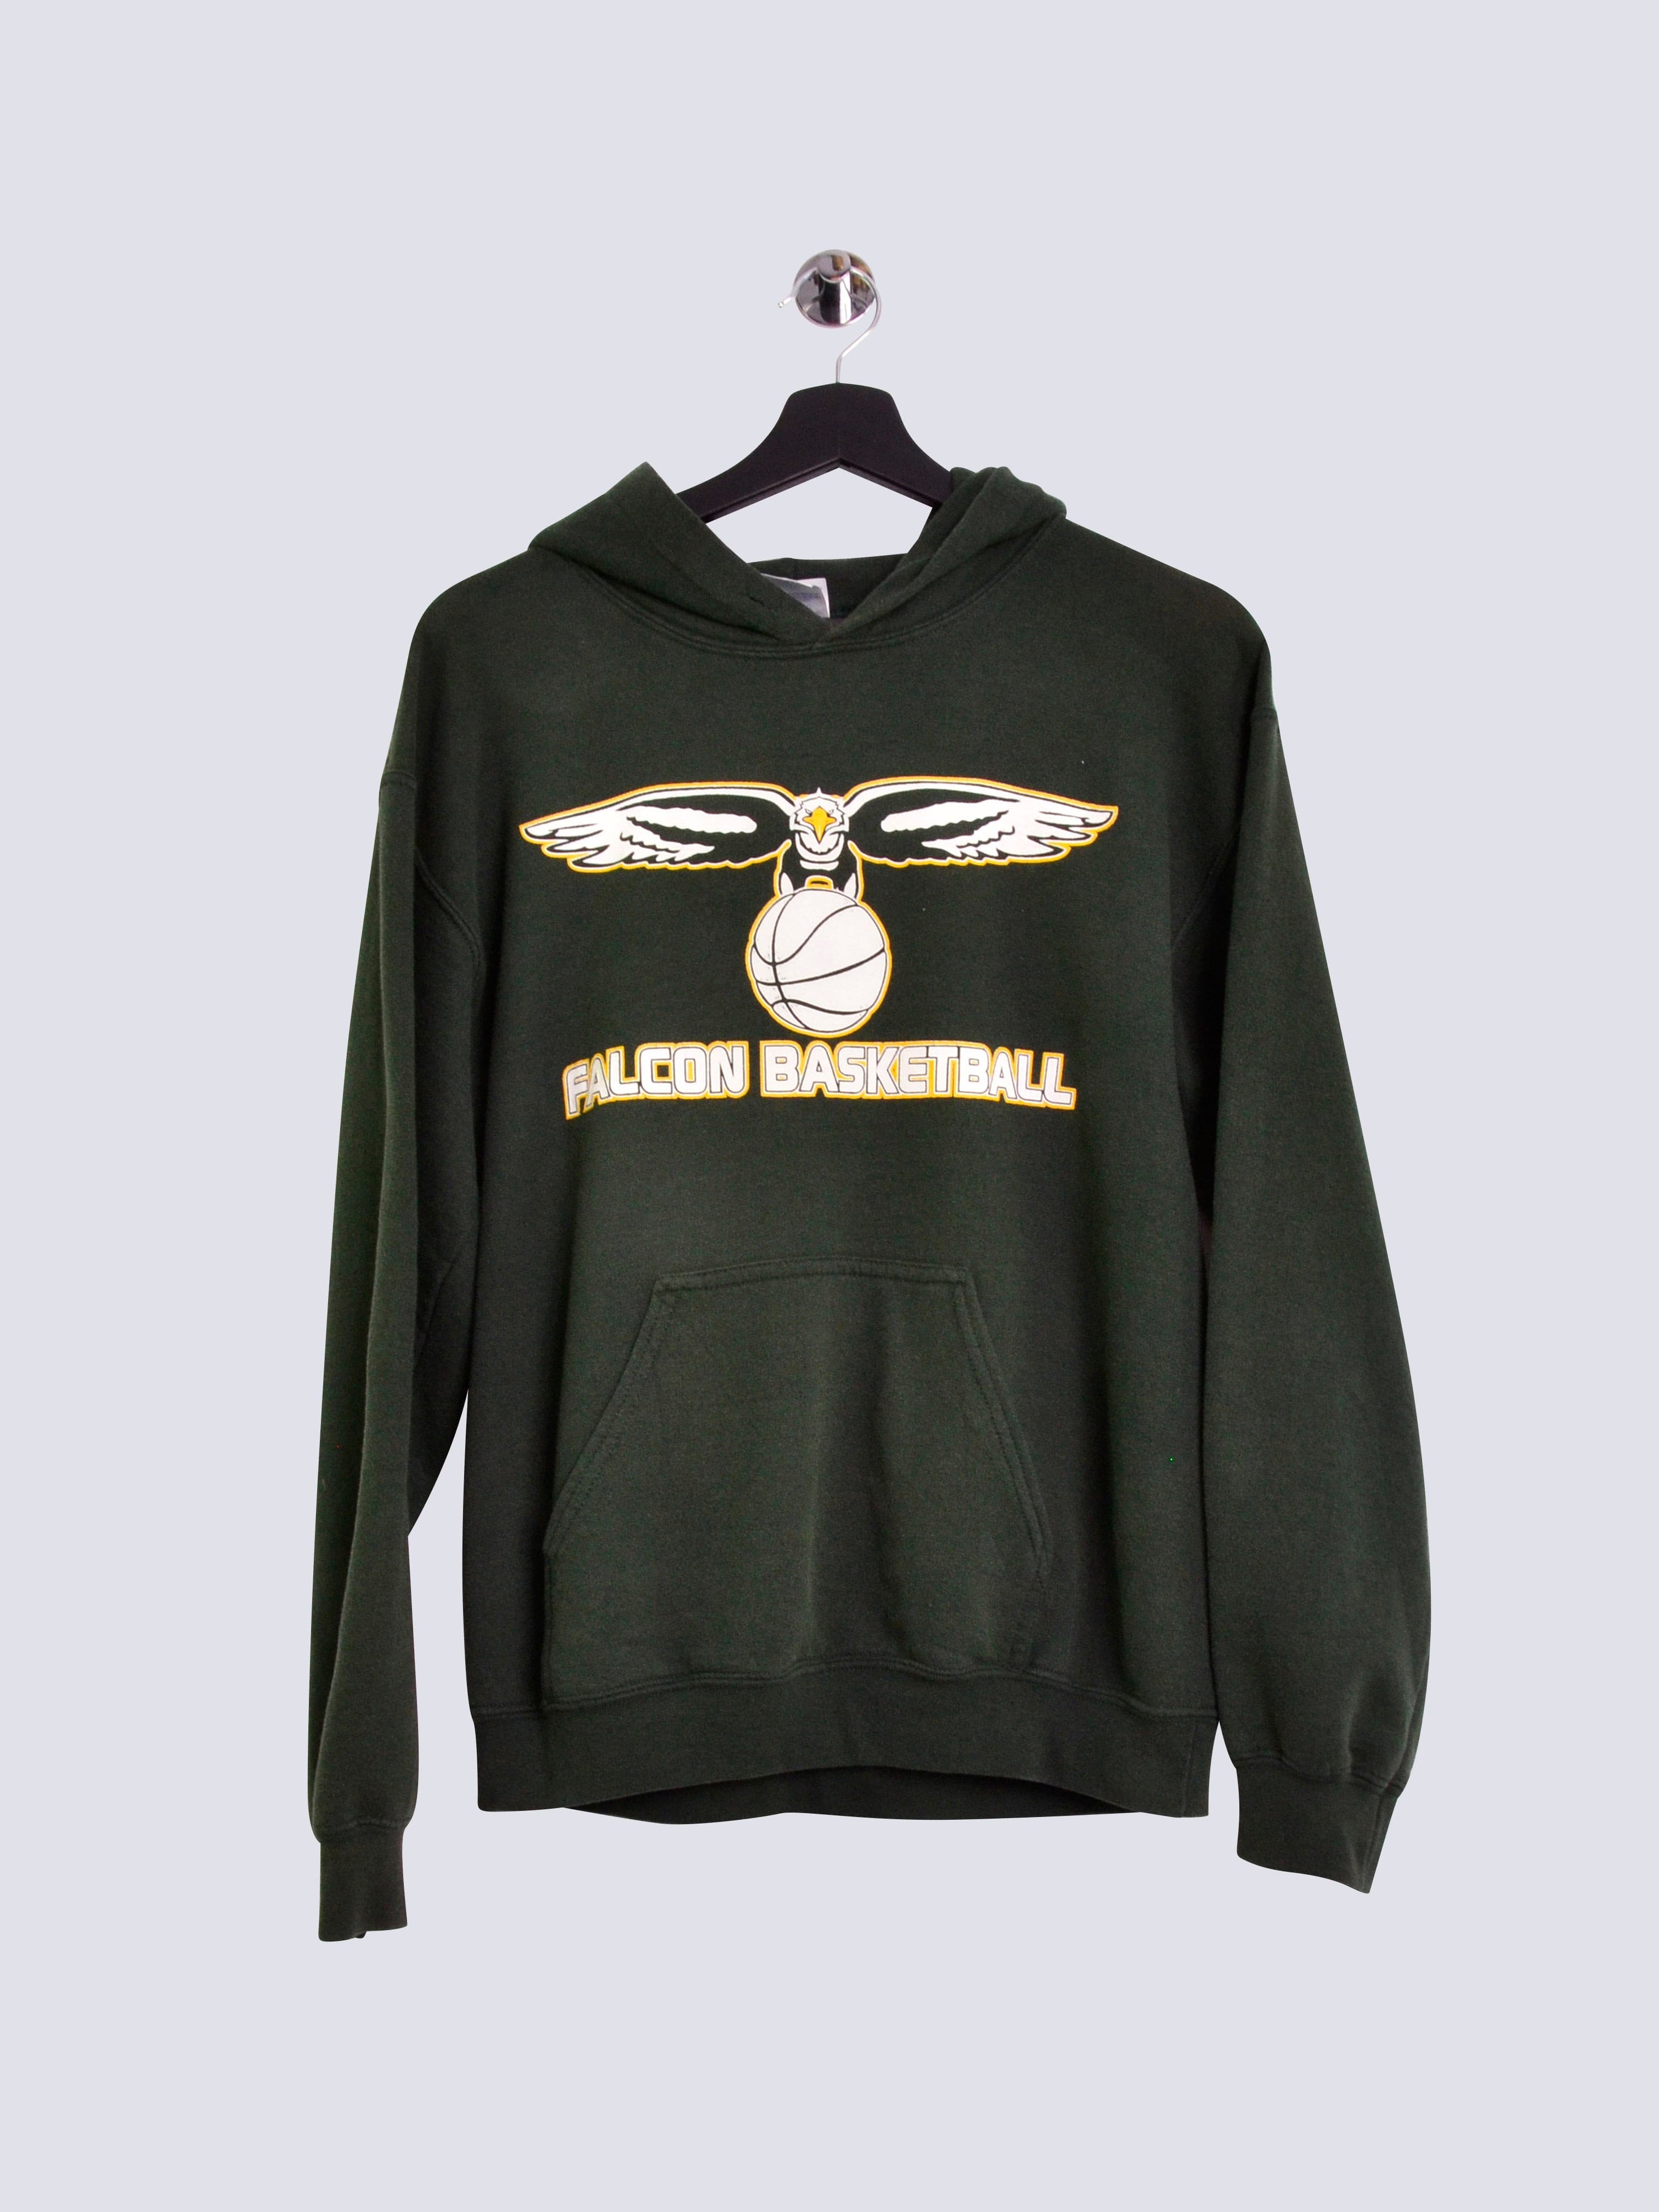 Falcon Basketball Hoodie Green // X-Small - RHAGHOUSE VINTAGE